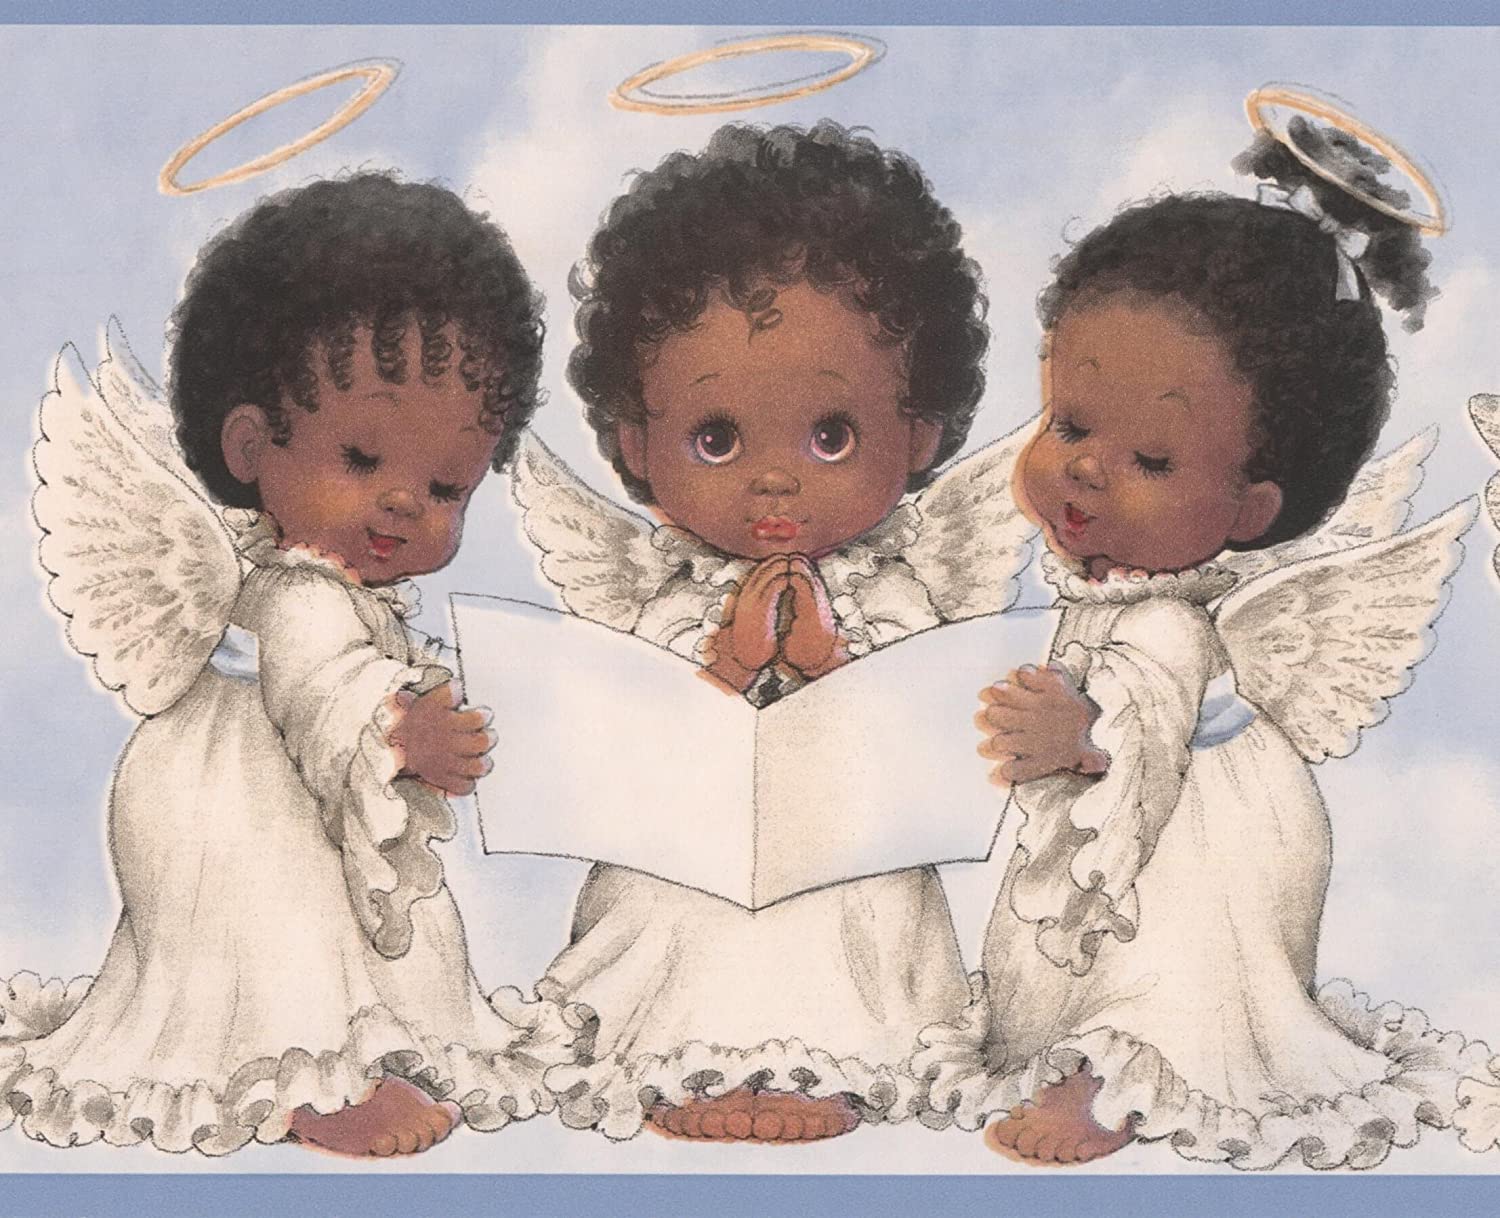 black baby angels in heaven